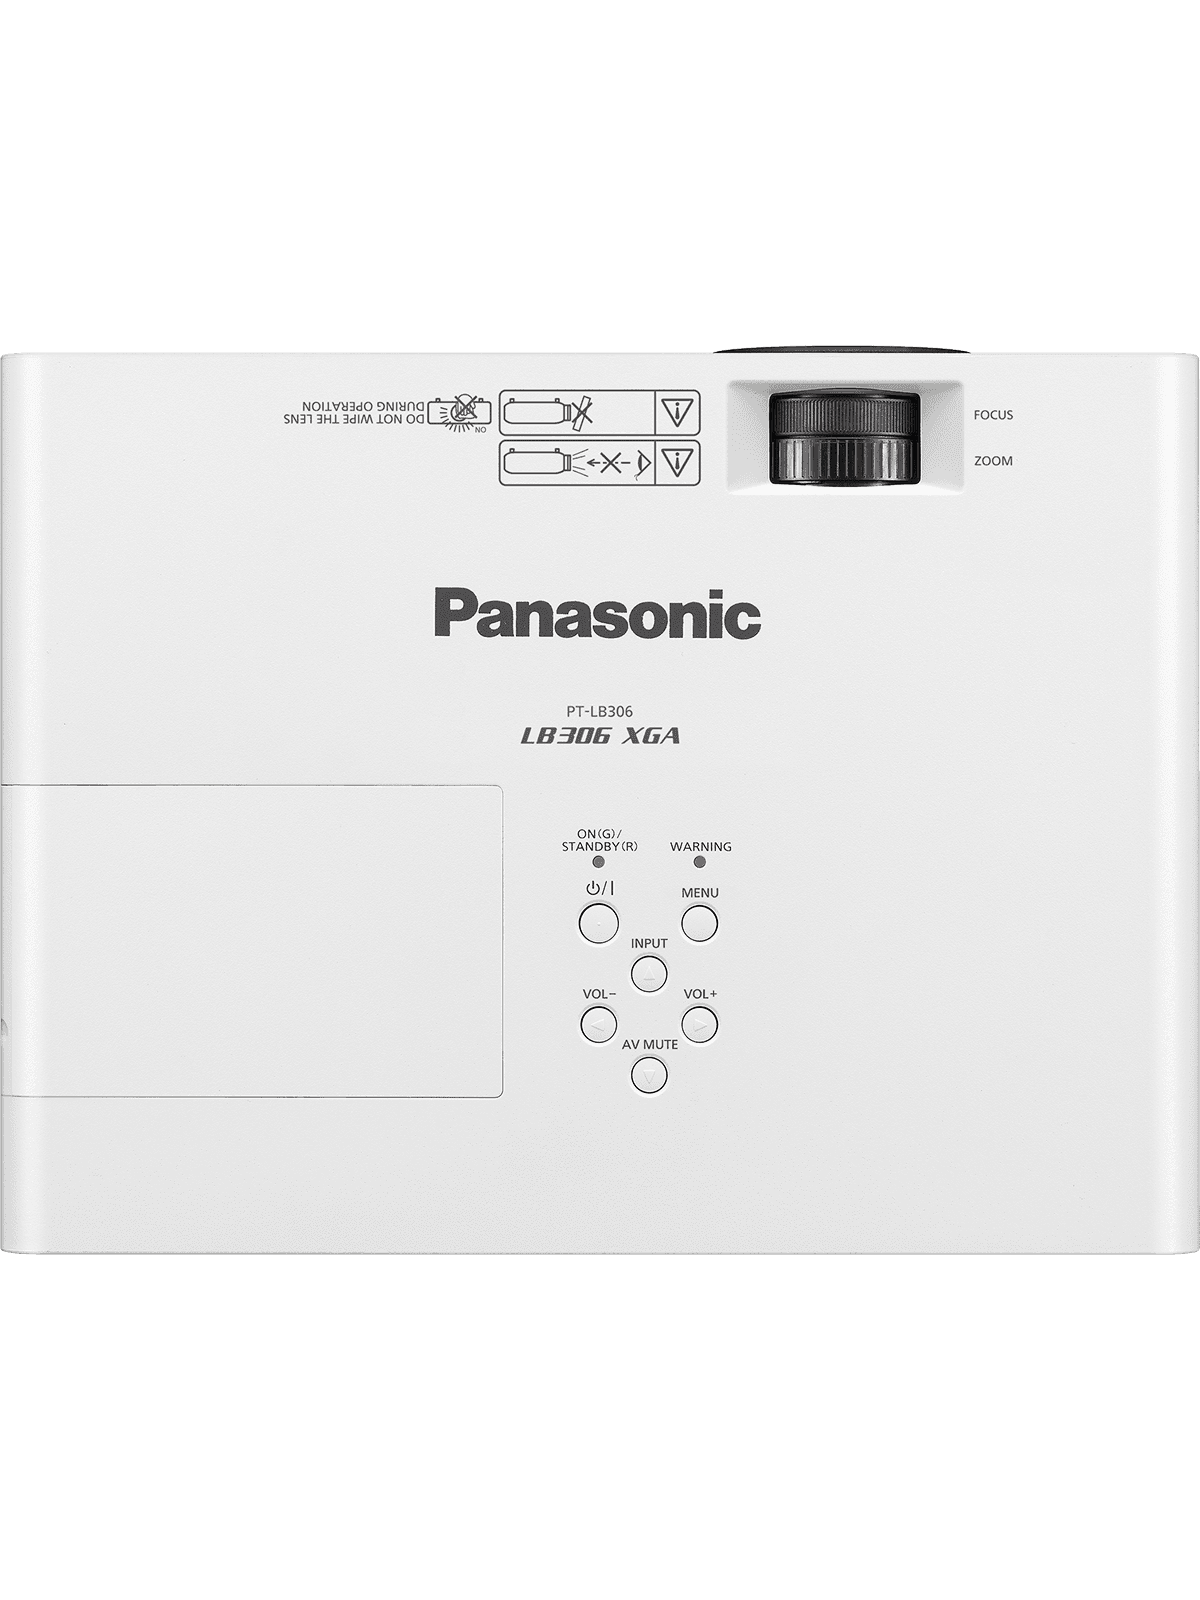 Panasonic - PT-LB306 3100 Lm XGA